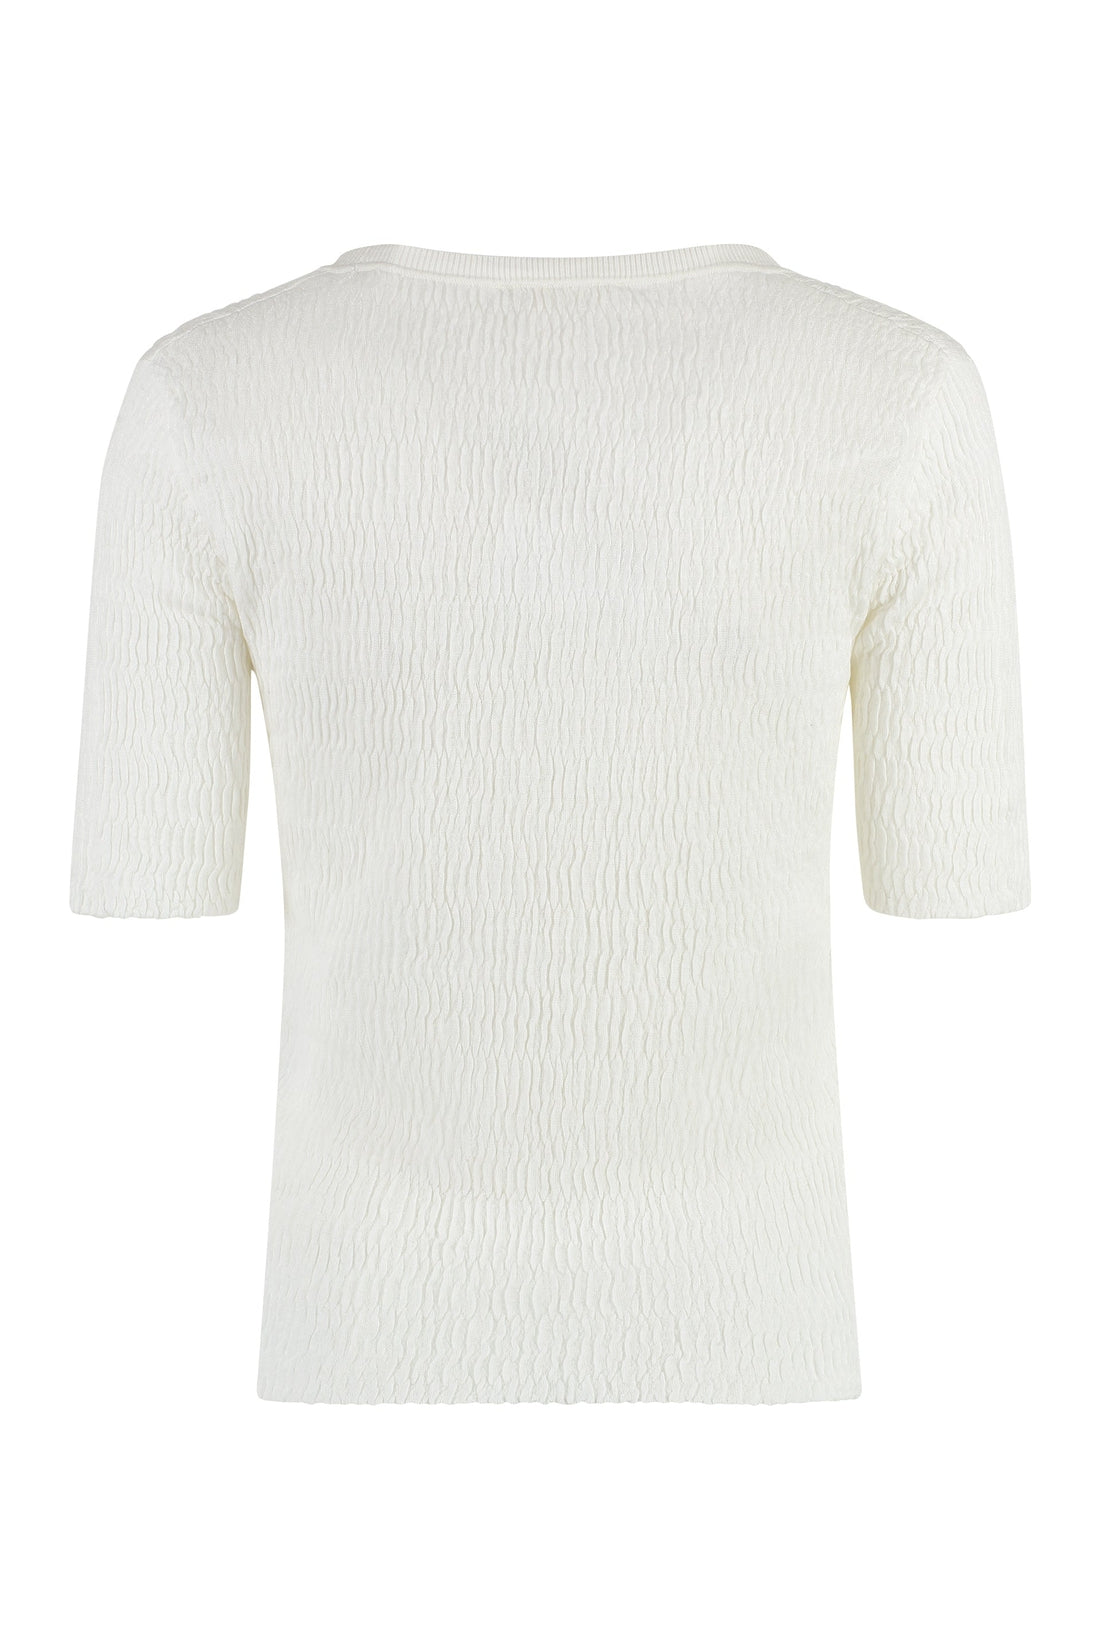 Chloé-OUTLET-SALE-Short sleeve sweater-ARCHIVIST